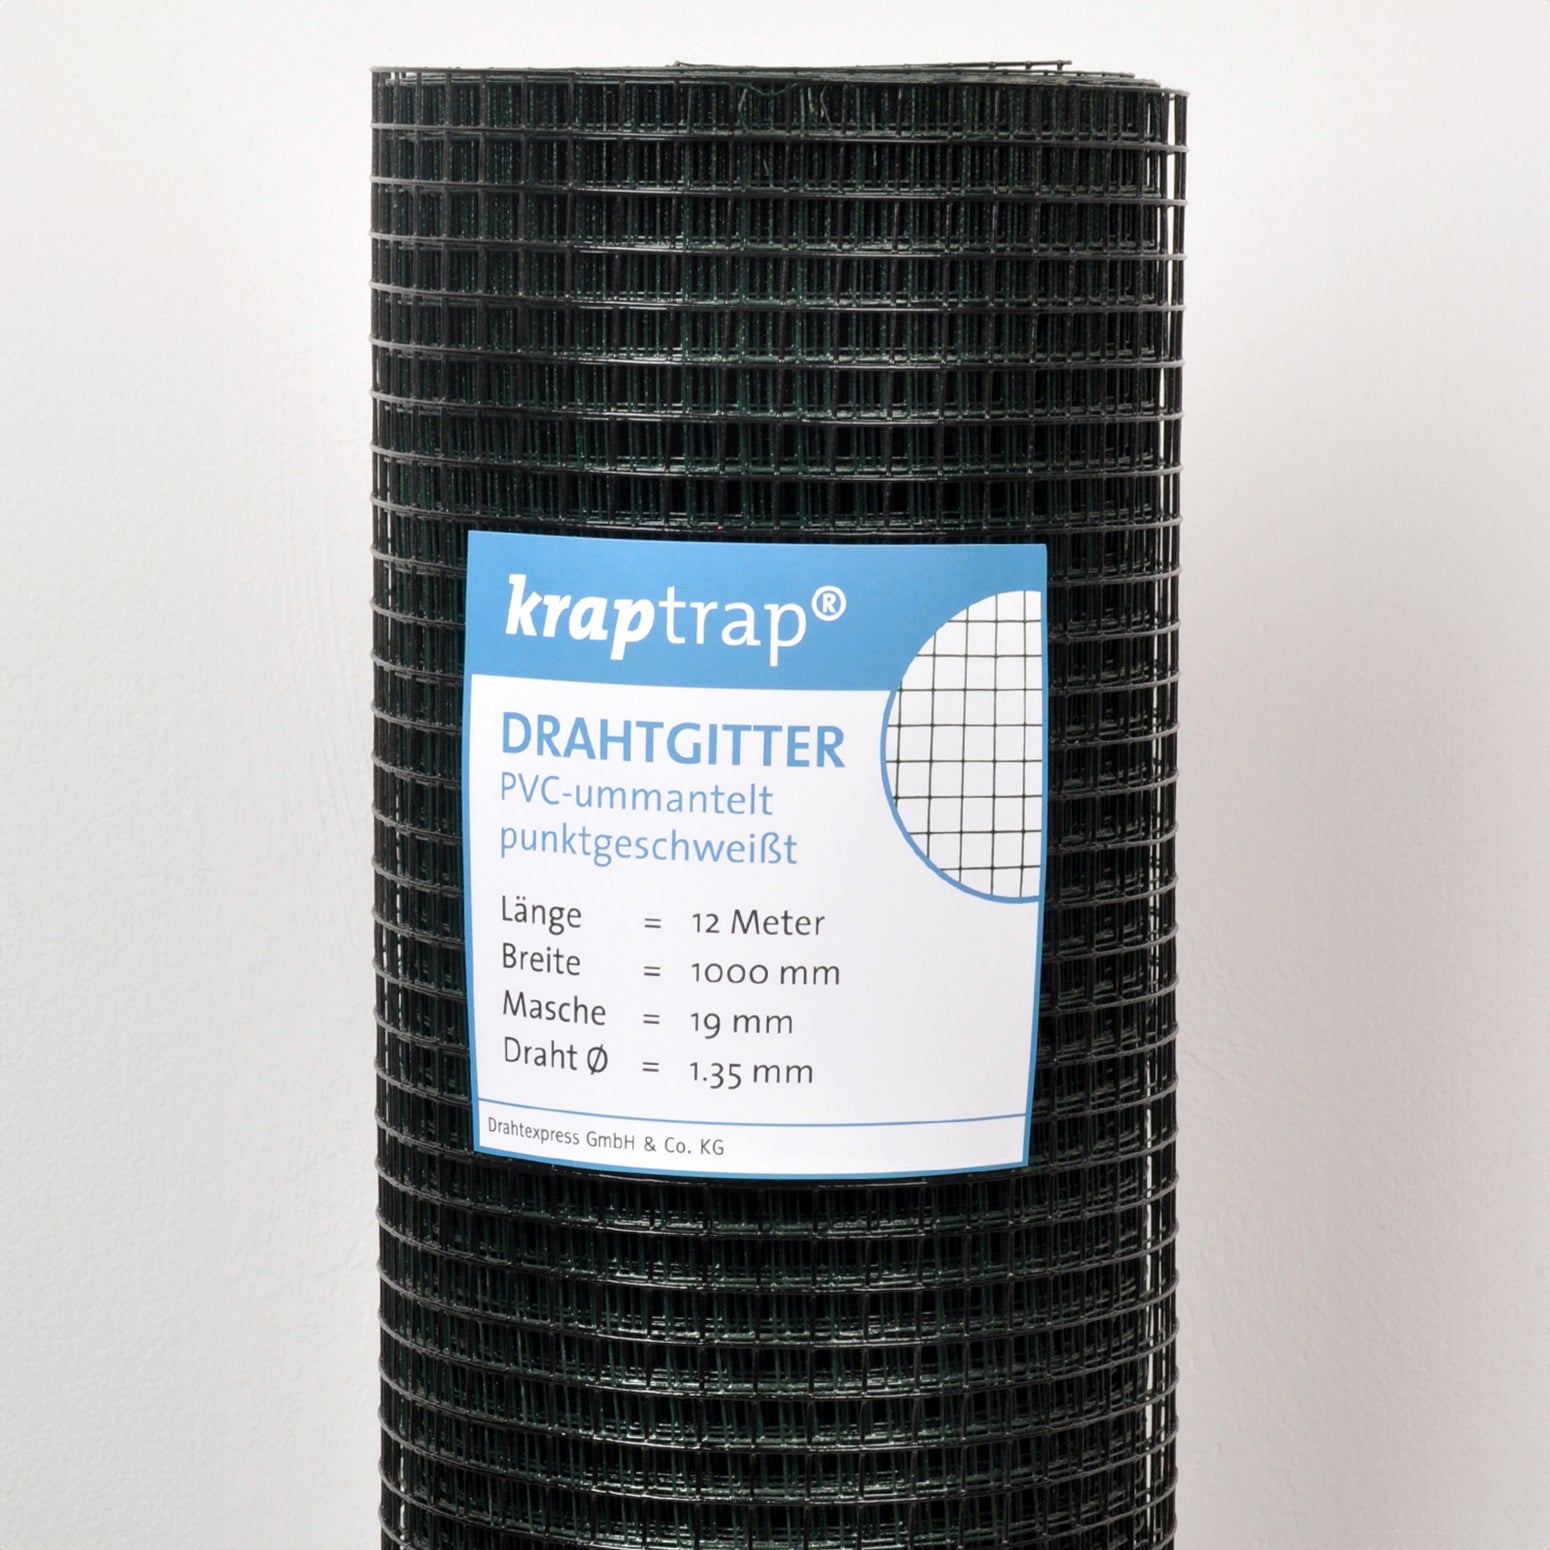 Kraptrap® Volierendraht Drahtgitter 19 mm Masche, 100 cm breit, schwarz ummantelt